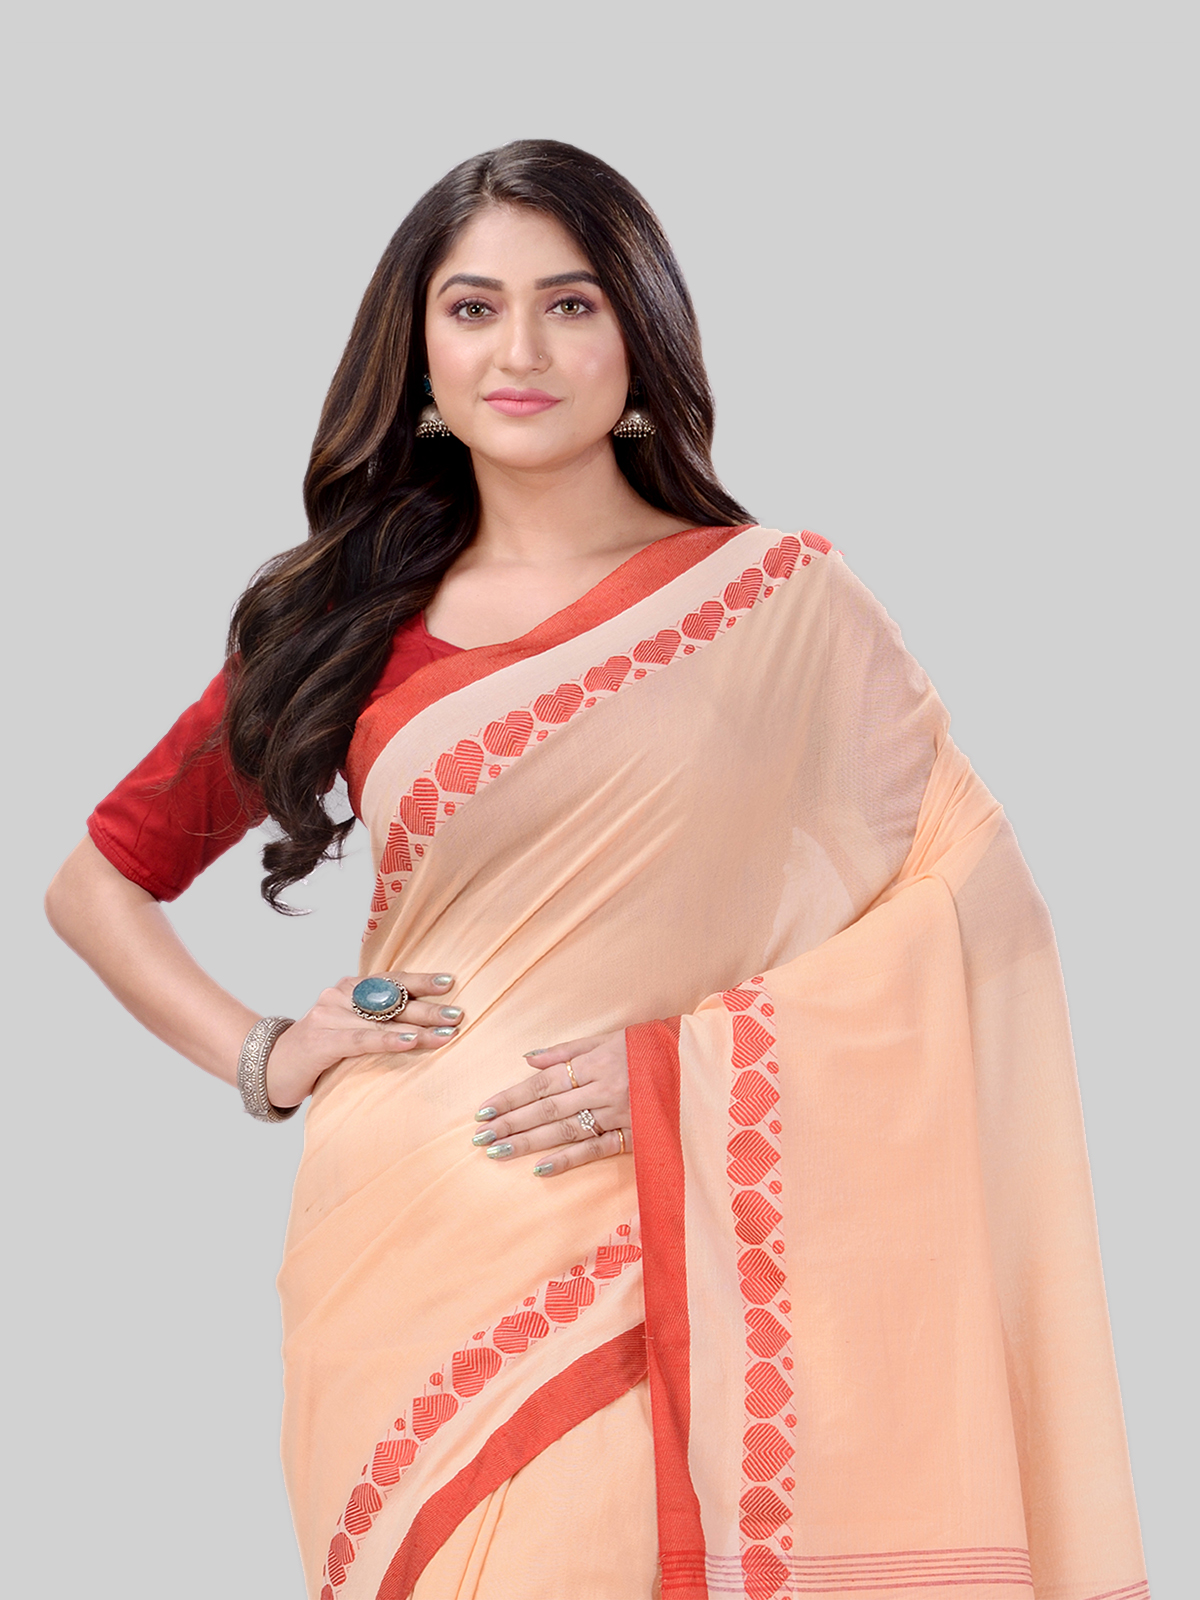 DESH BIDESH Women`s Traditional Bengali Tant Handloom Cotton Saree Royel Loveria Design With Blouse Piece (Cream Red)